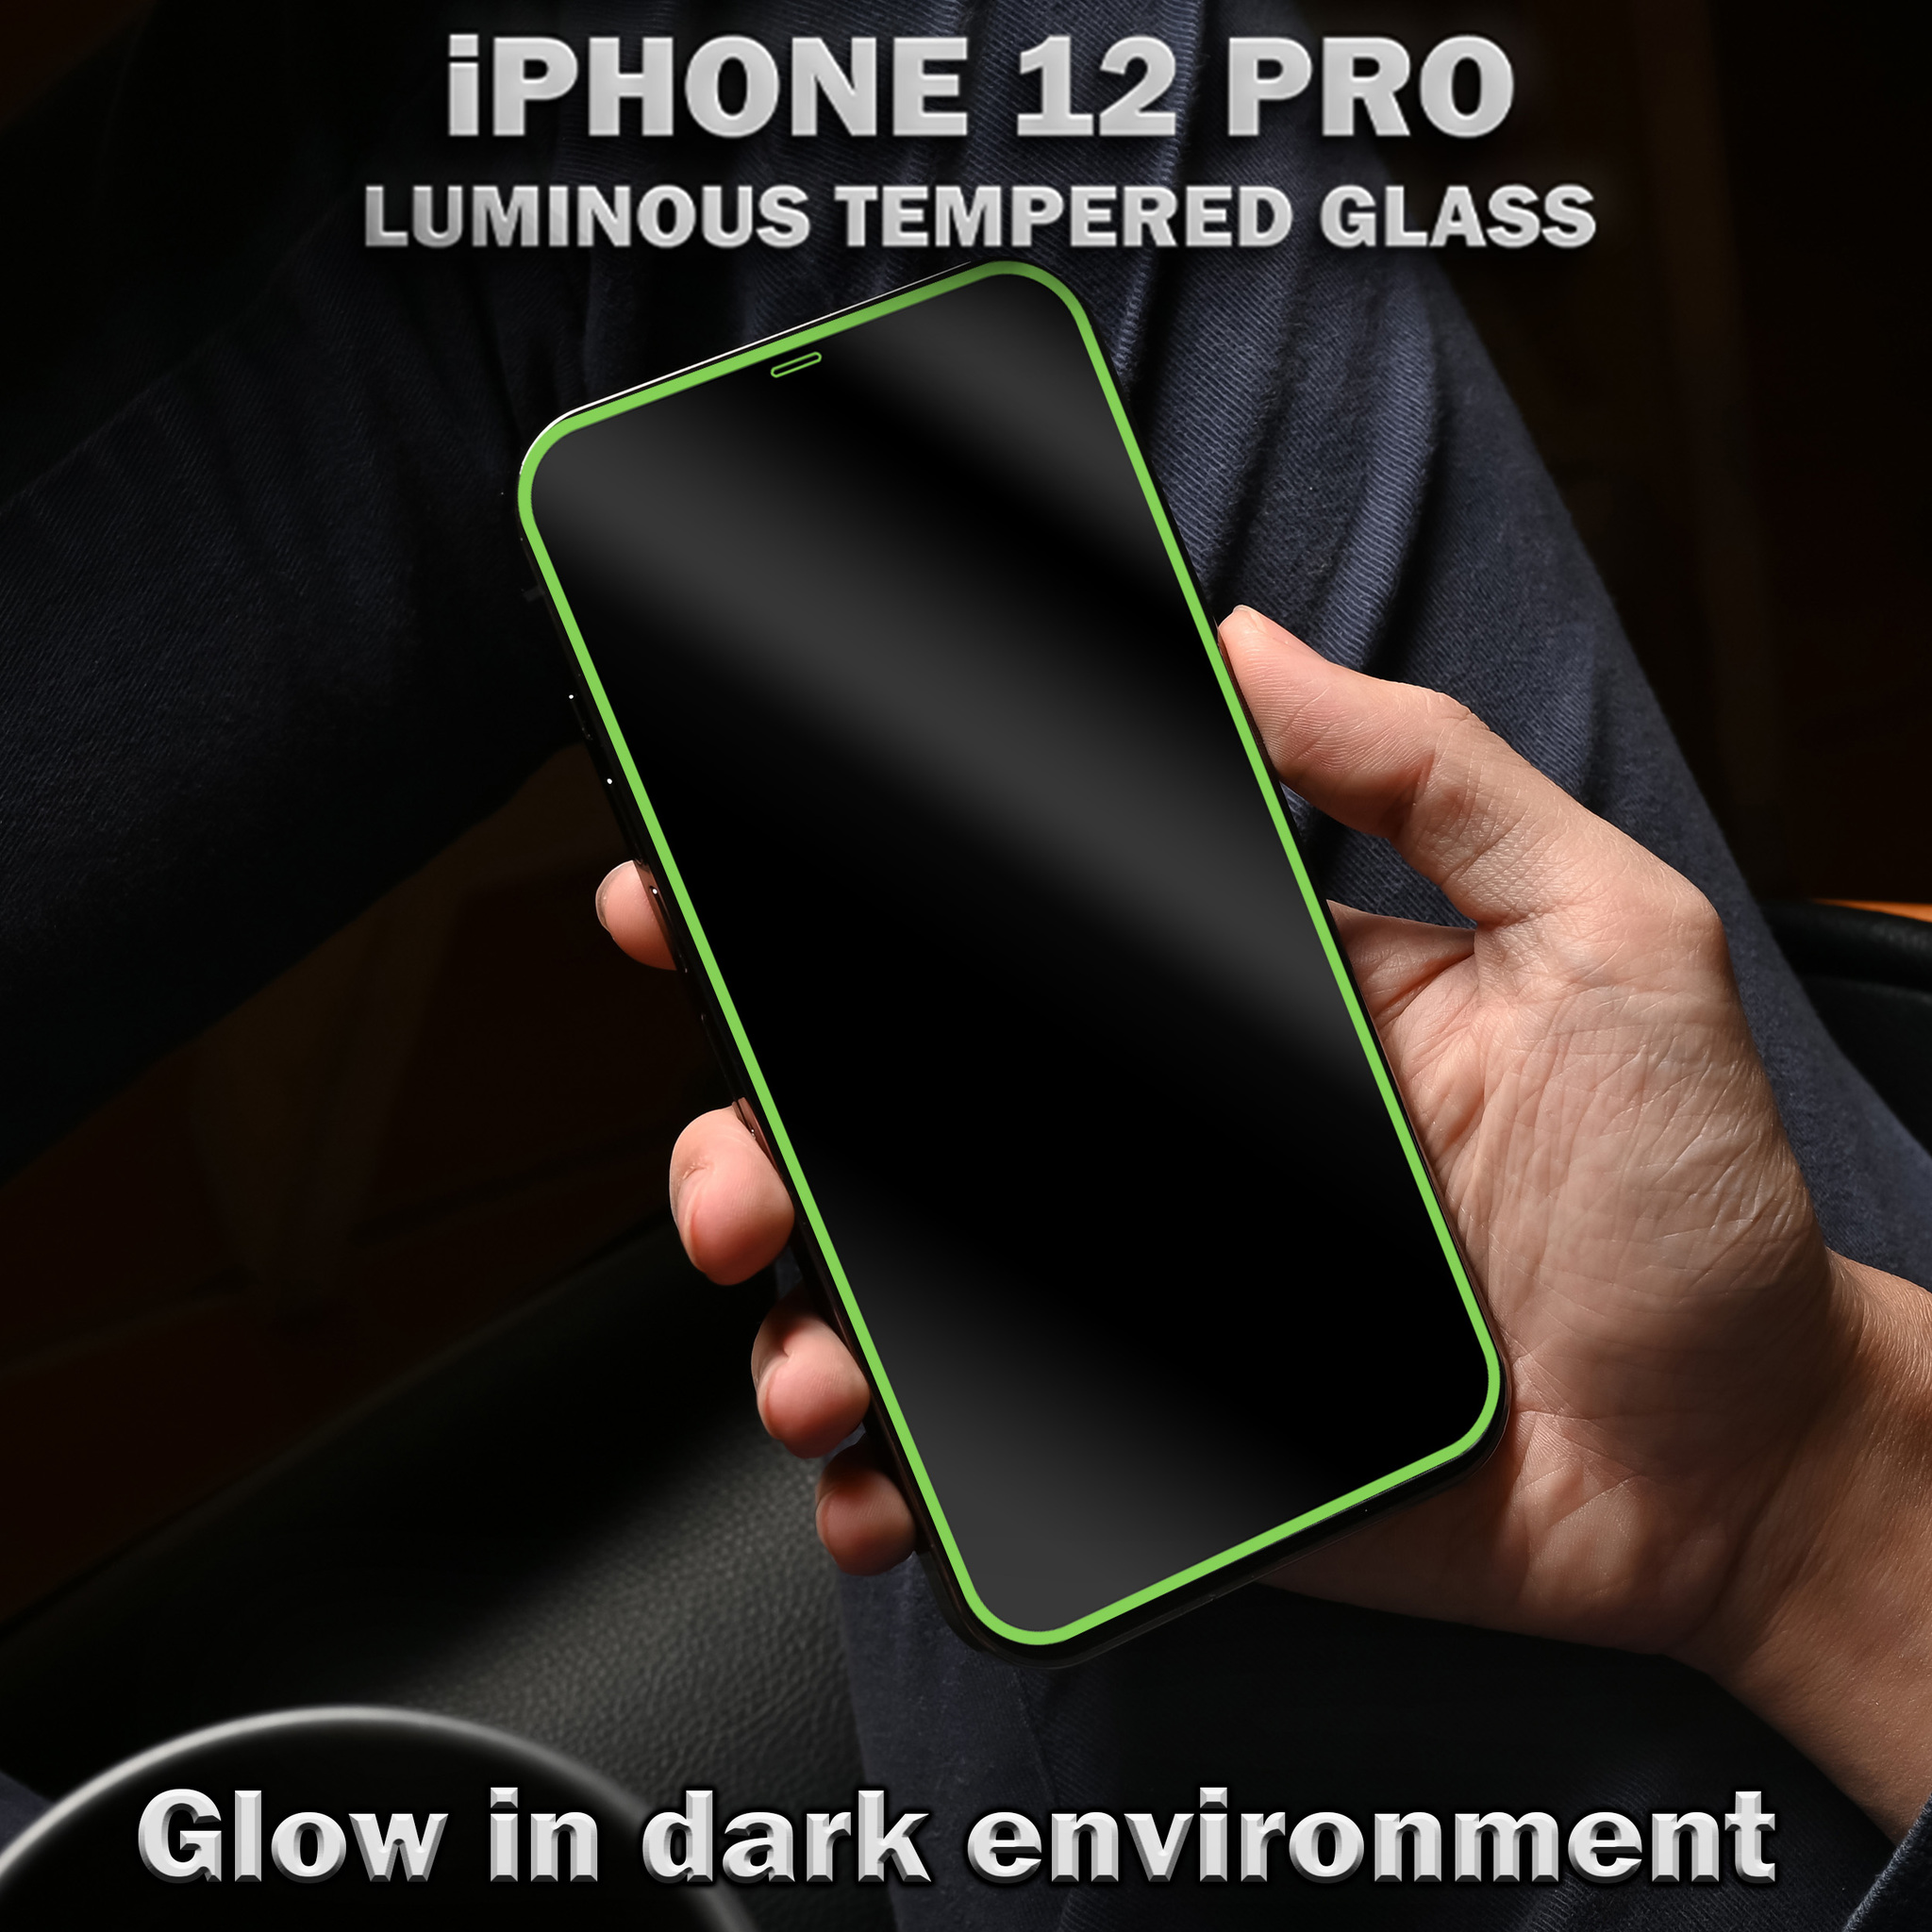 Kopia Kopia 1-Pack Självlysande Skärmskydd For iPhone 12 Pro - Härdat Glas 9H - Super Kvalitet 3D